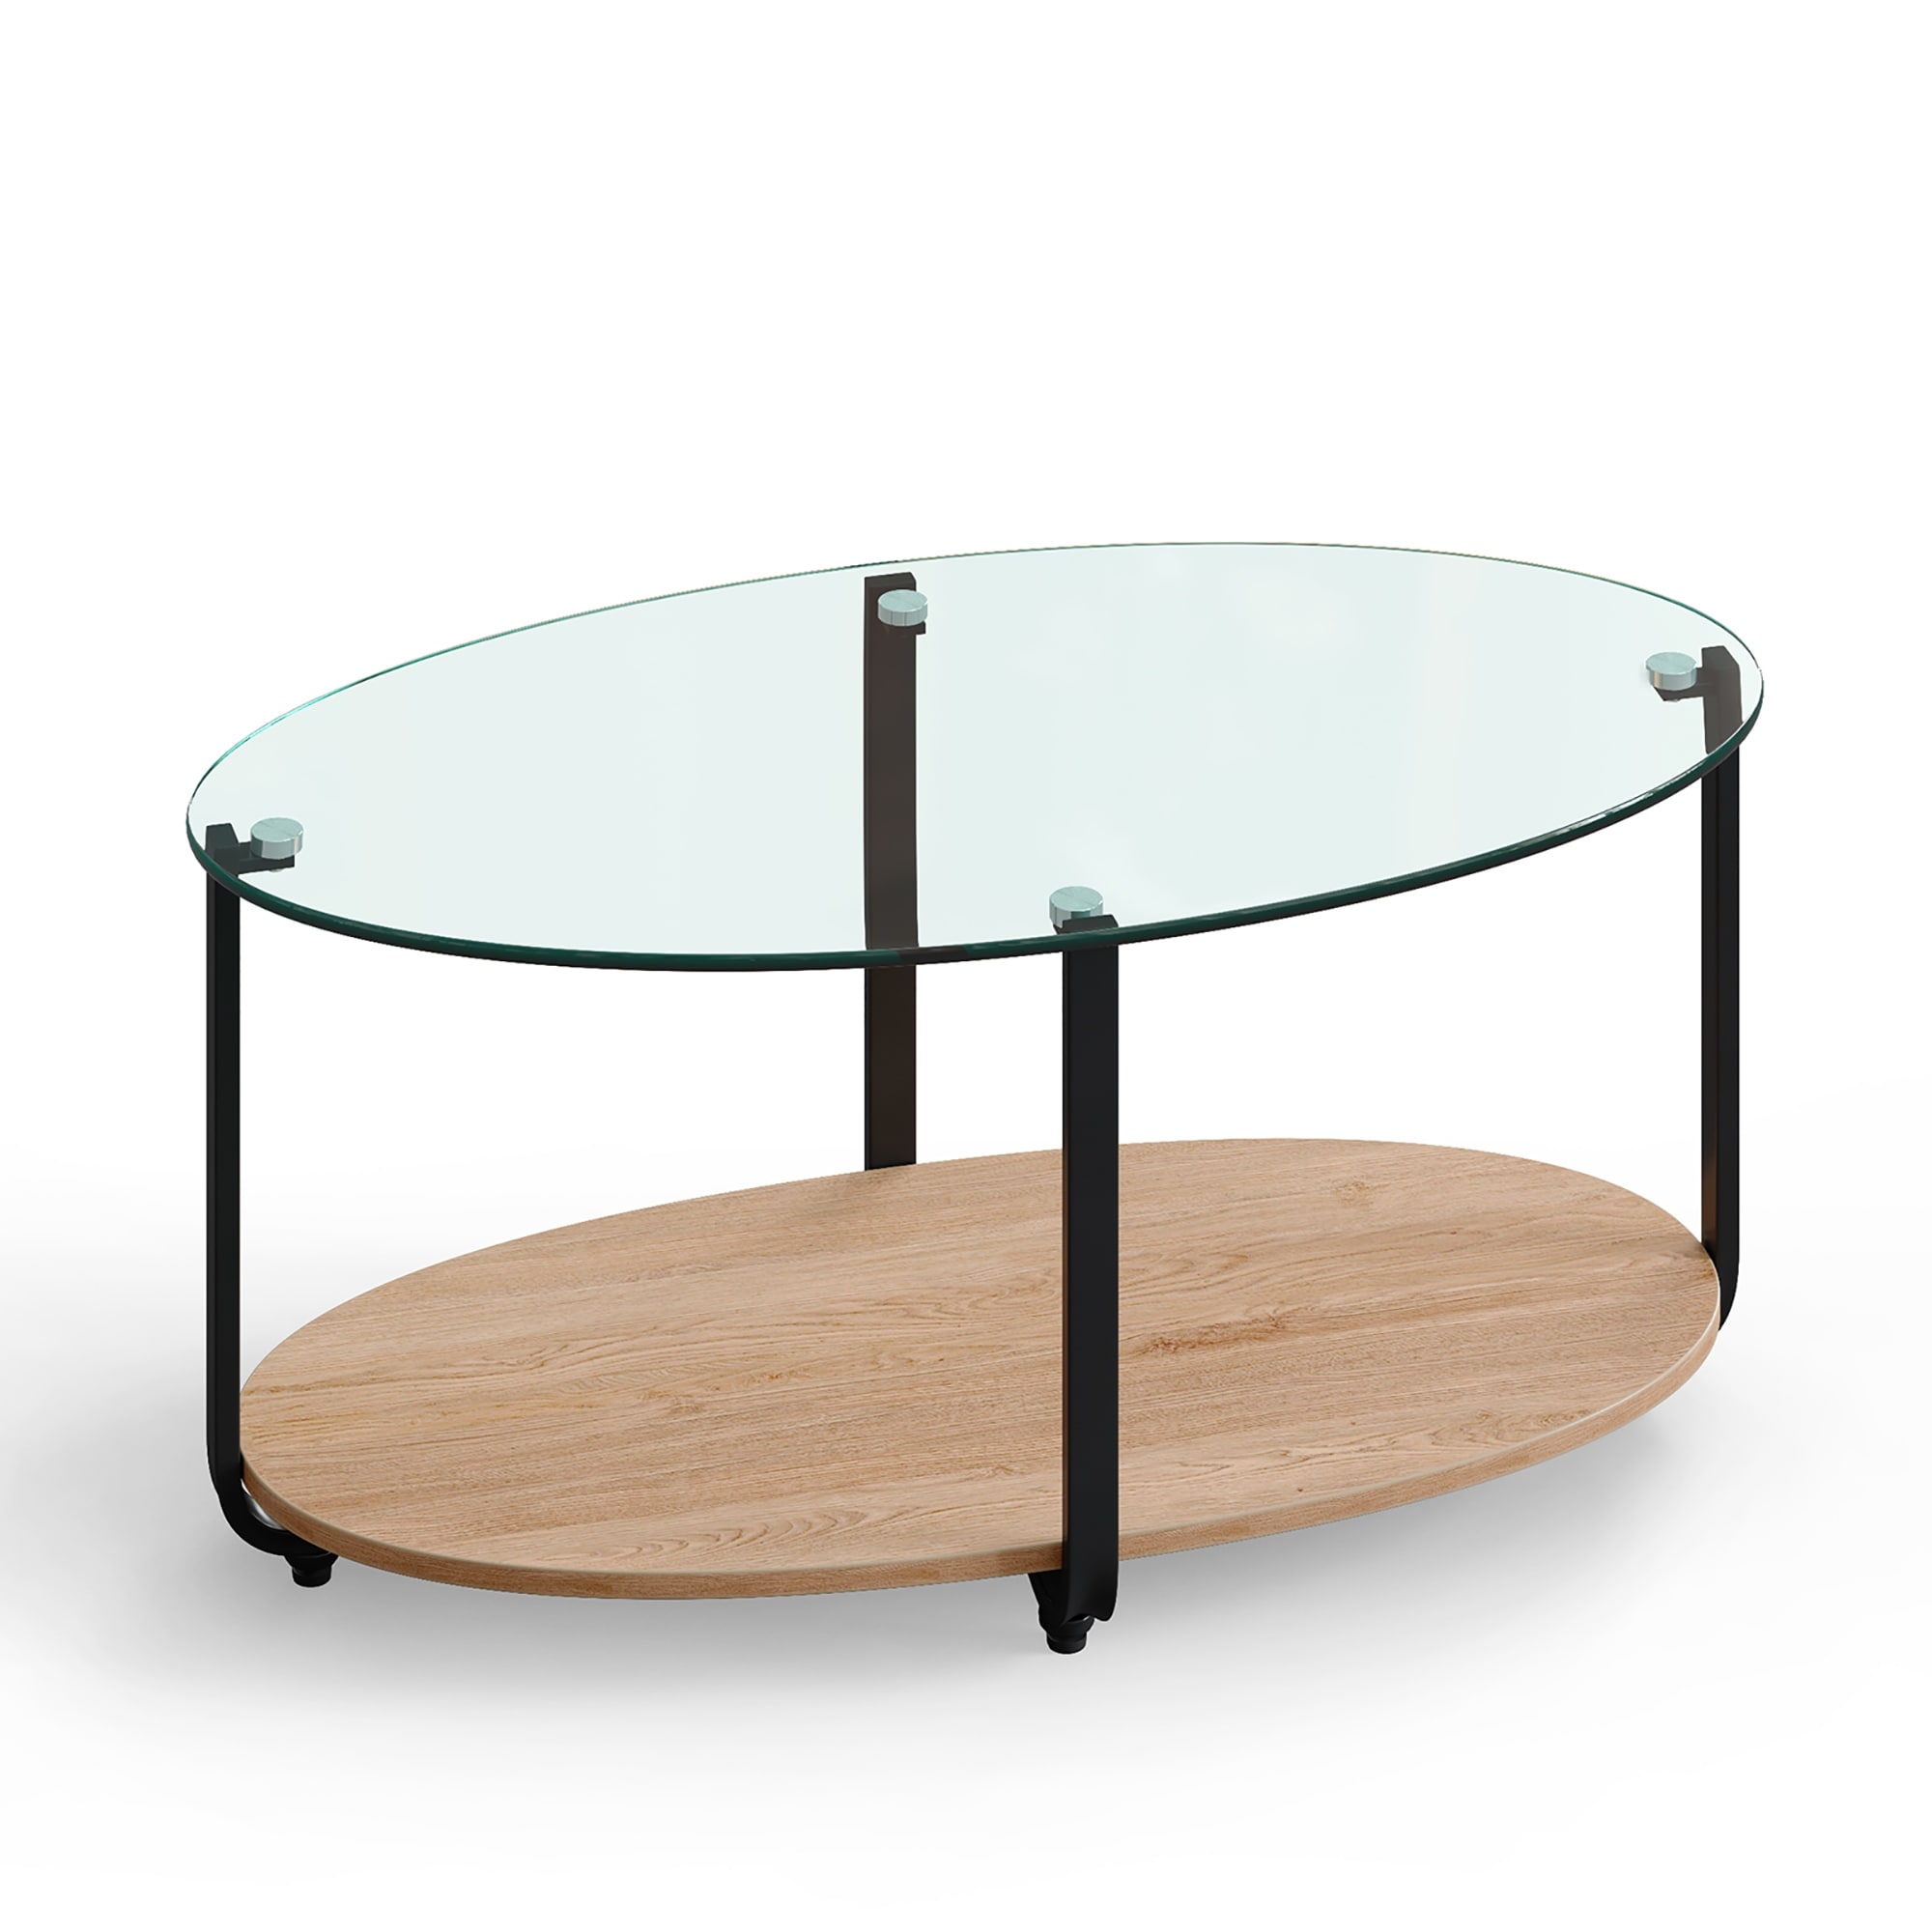 2 Tier Glass Coffee Table Oval Tea Table Modern Sofa Center Table